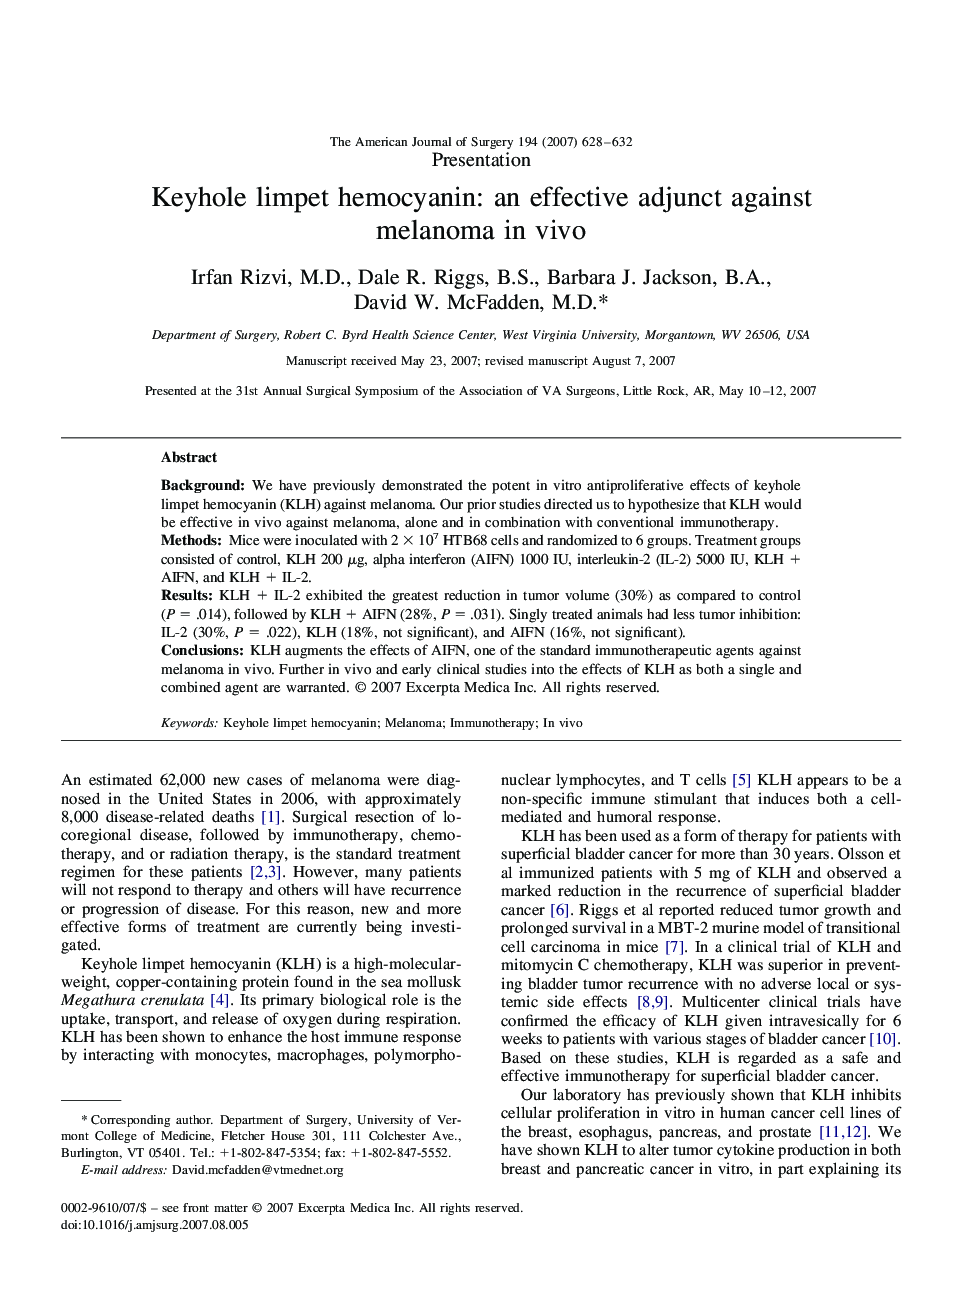 Keyhole limpet hemocyanin: an effective adjunct against melanoma in vivo